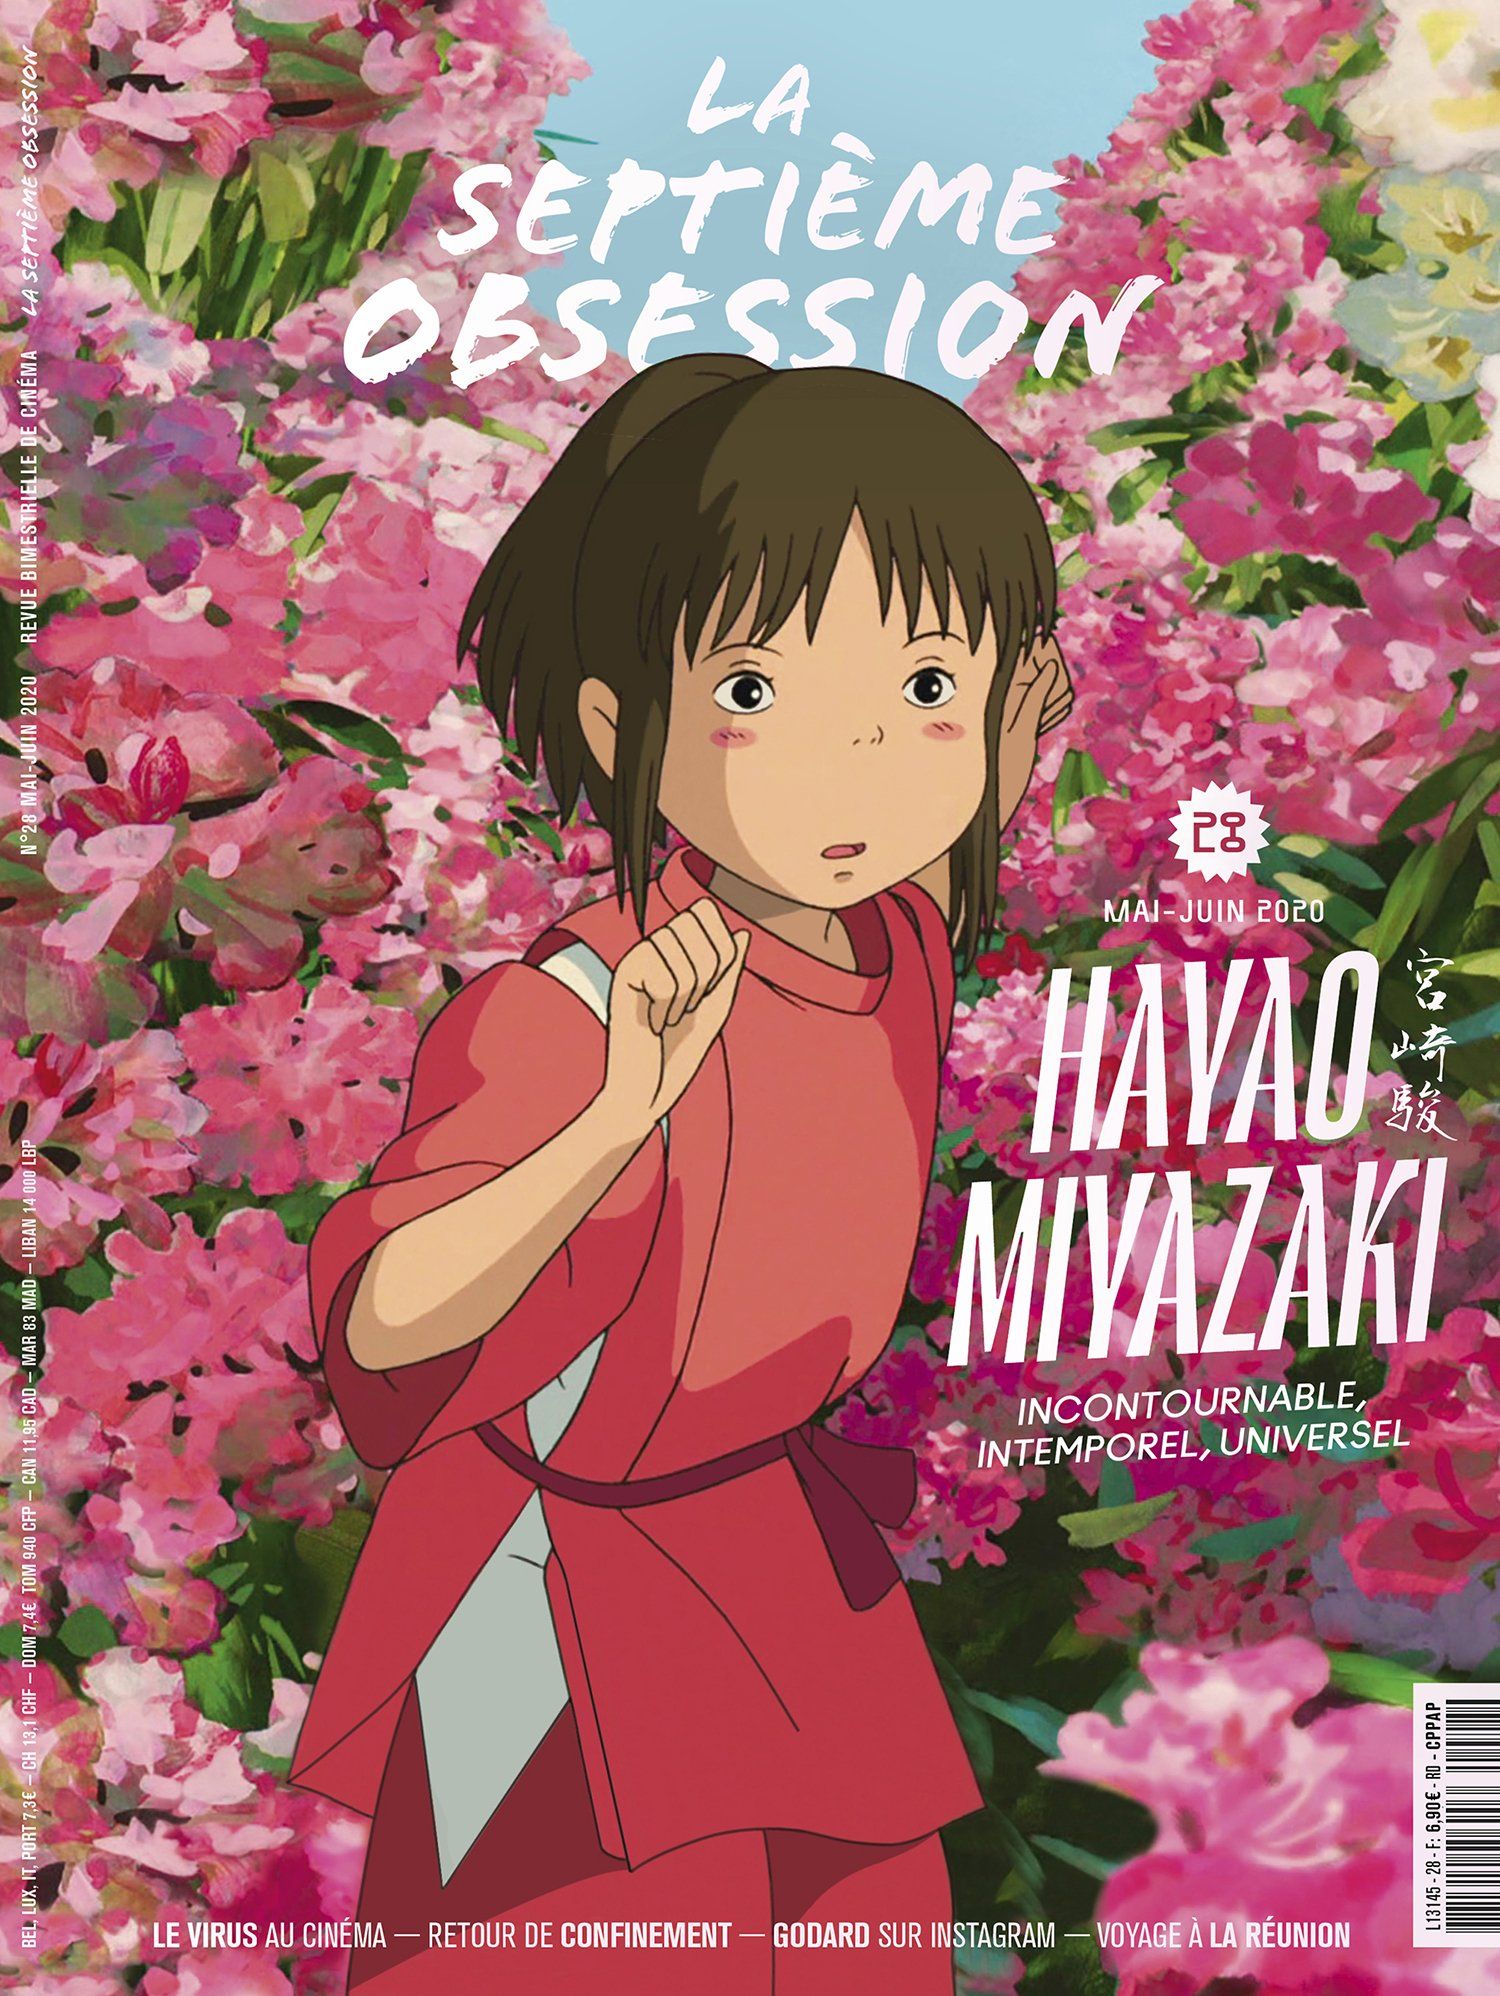 La-Septieme-Obsession-Miyazaki.jpg